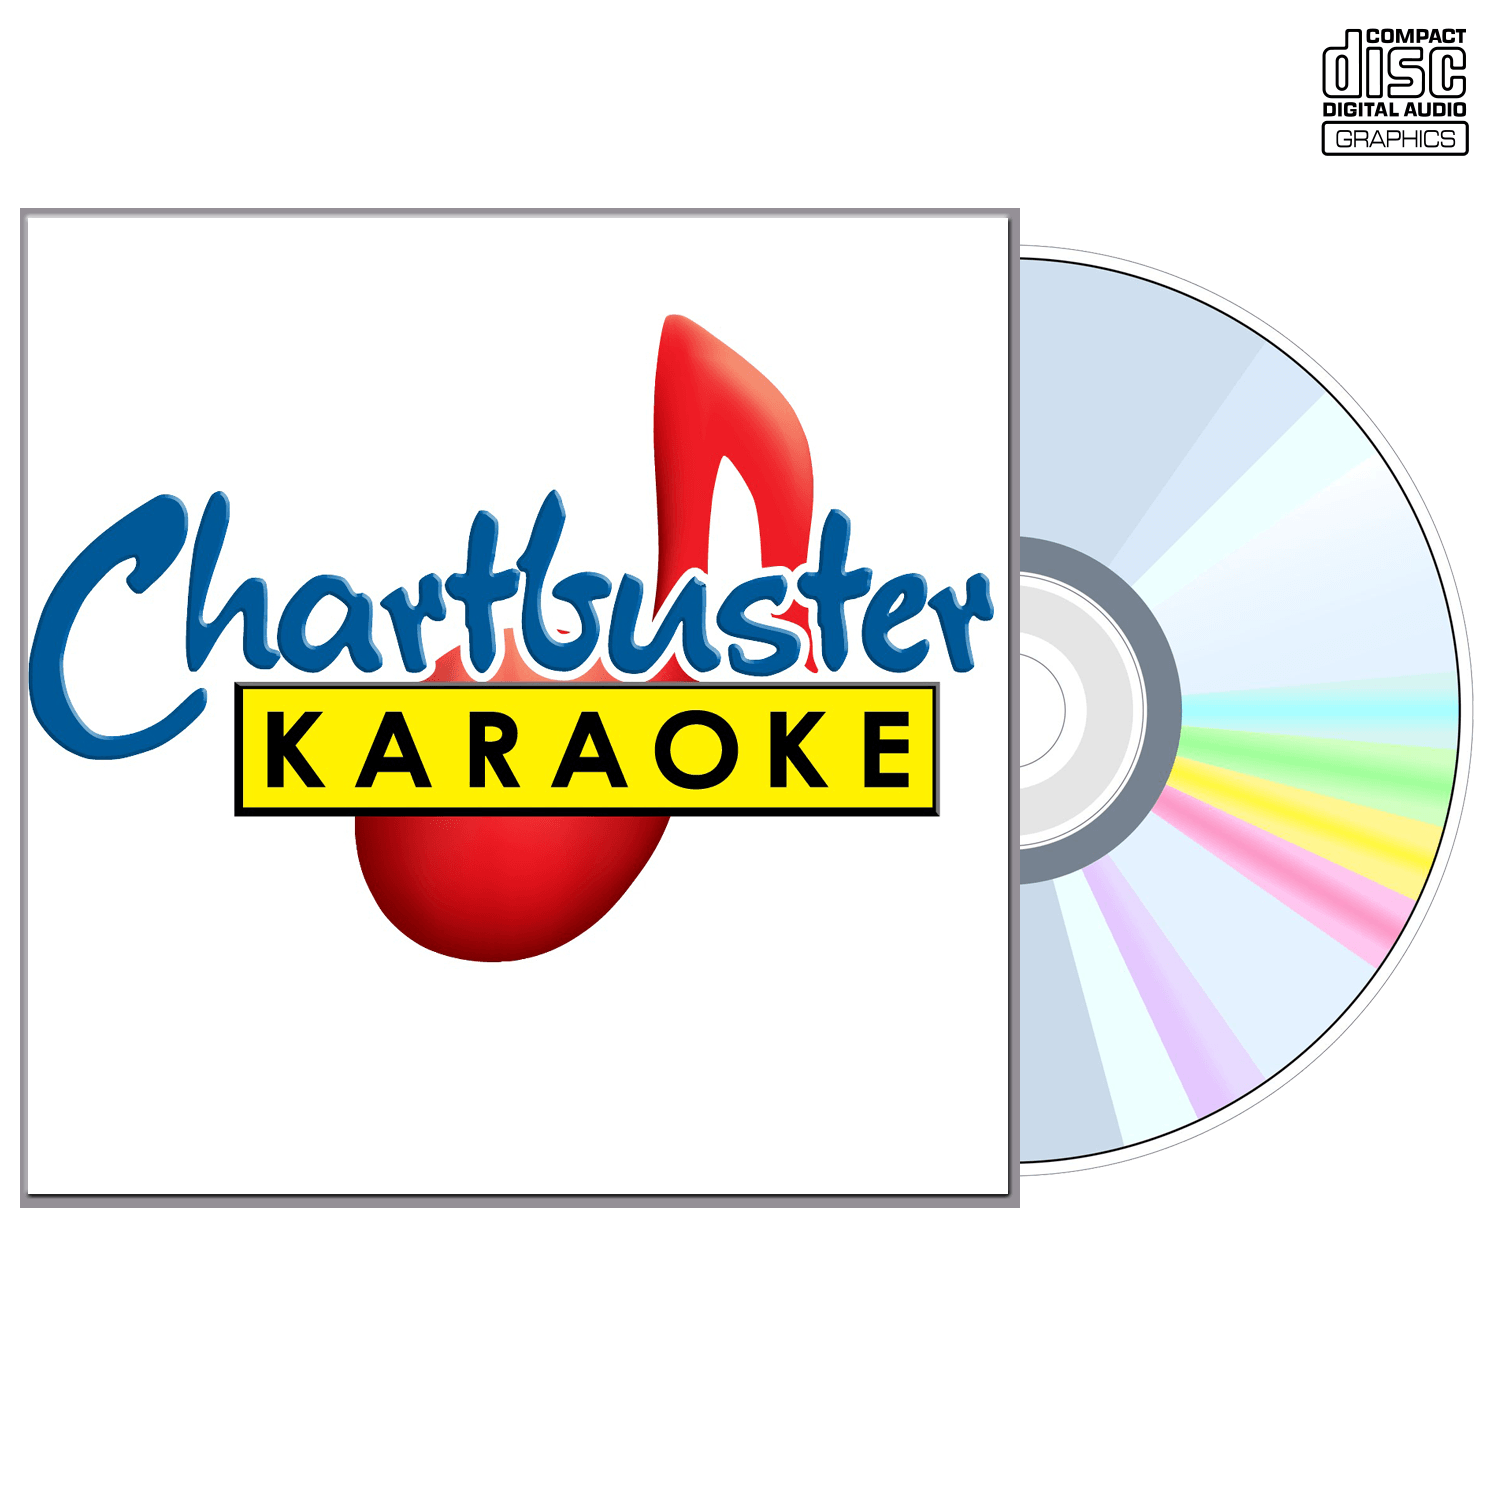 Best Of George Strait 90's - CD+G - Chartbuster Karaoke - Karaoke Home Entertainment